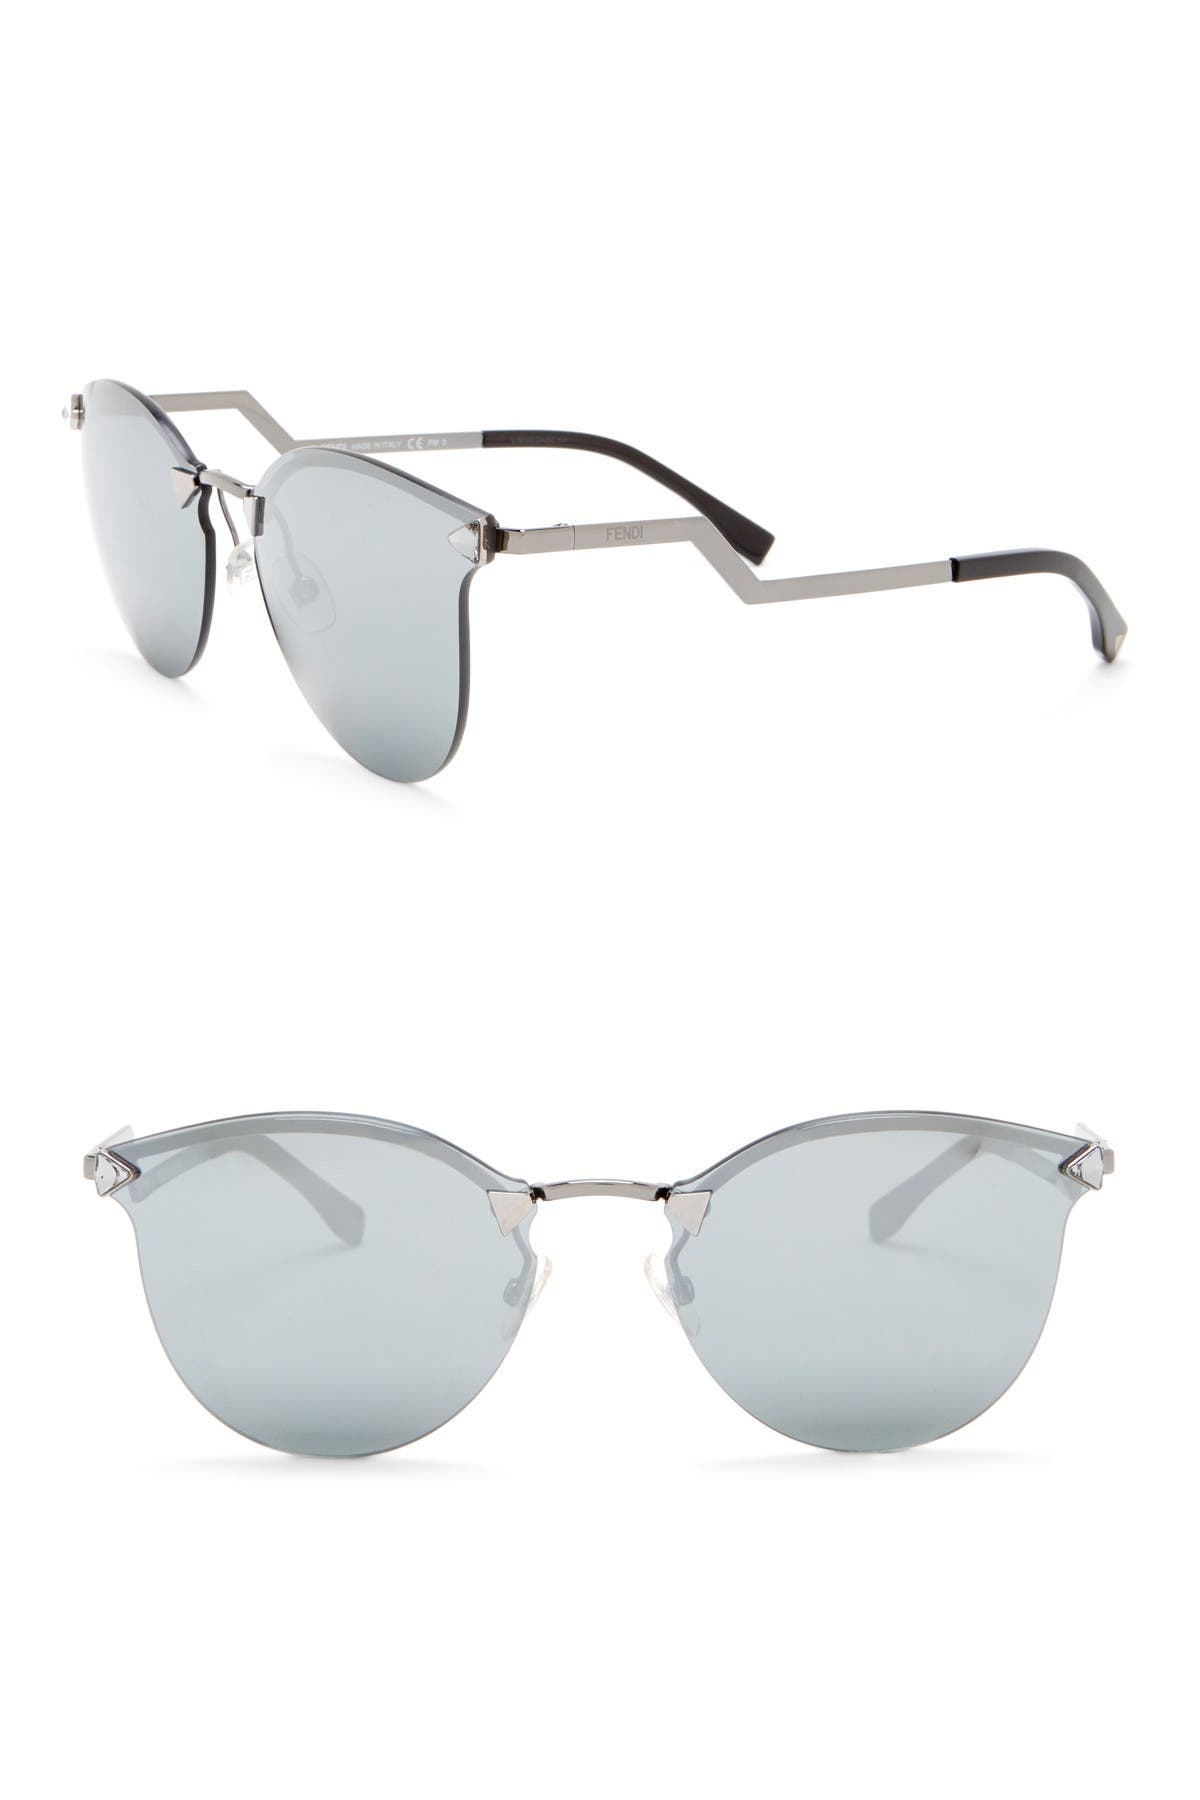 fendi women's square 60mm sunglasses